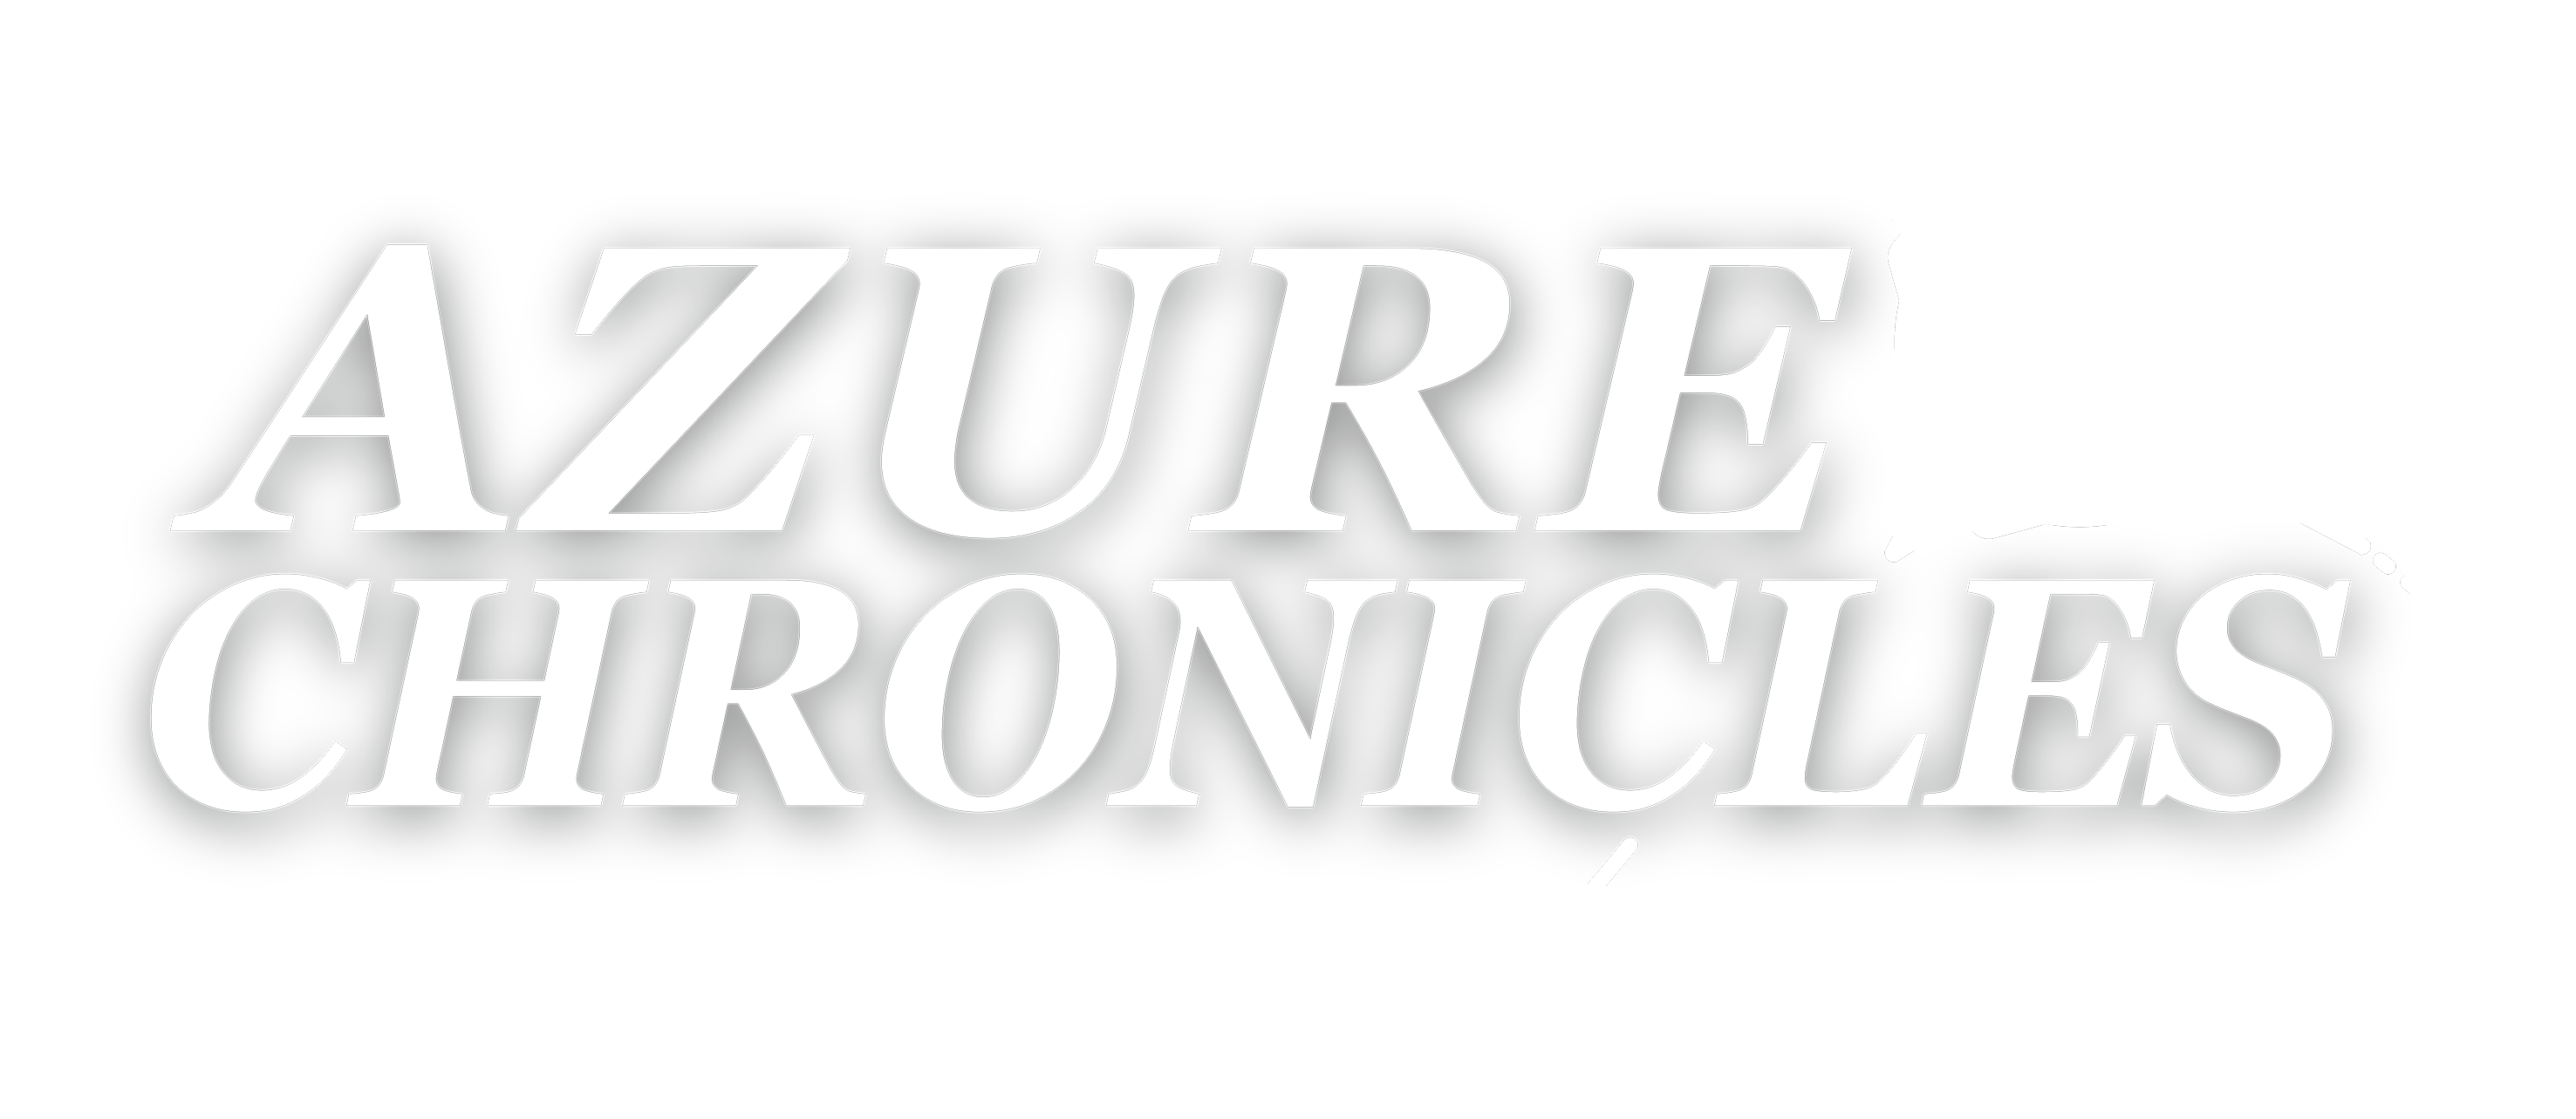 Azure Chronicles